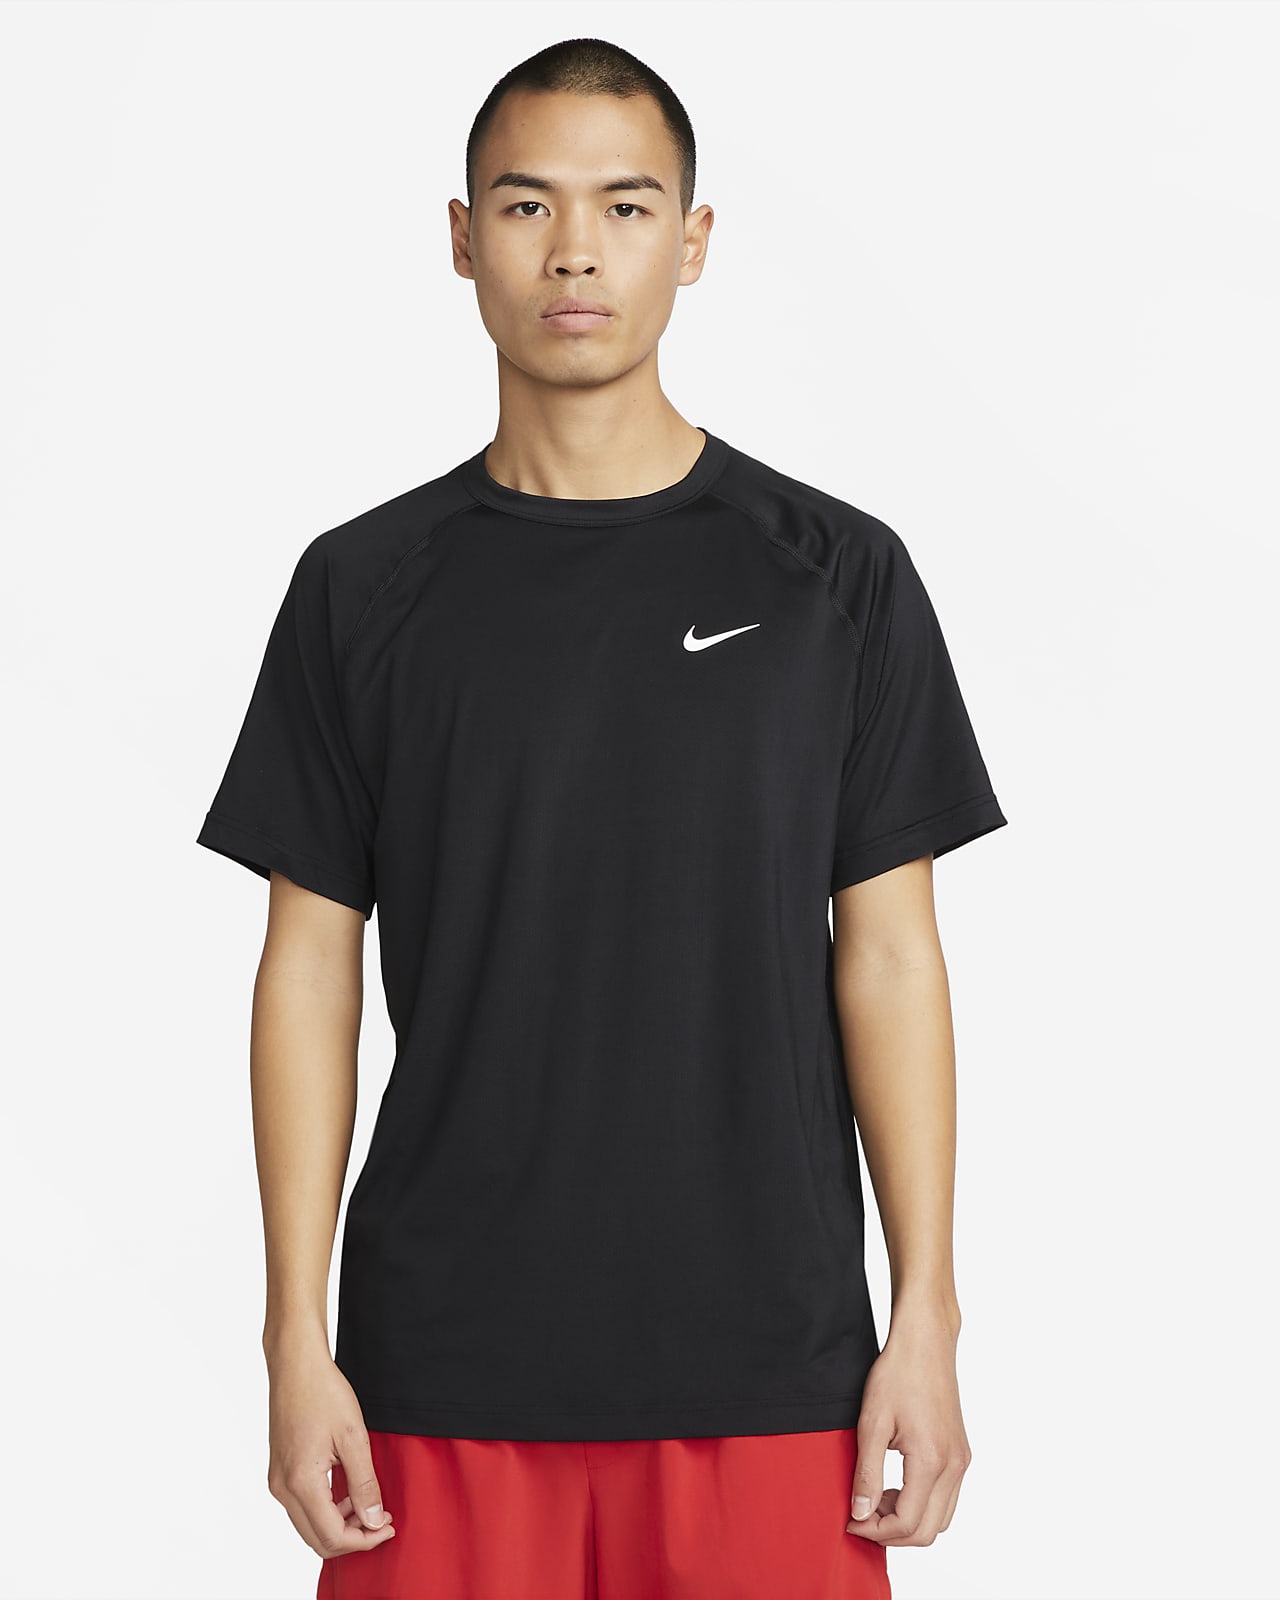 Nike Dri-FIT Men's Short-Sleeve Top. Nike